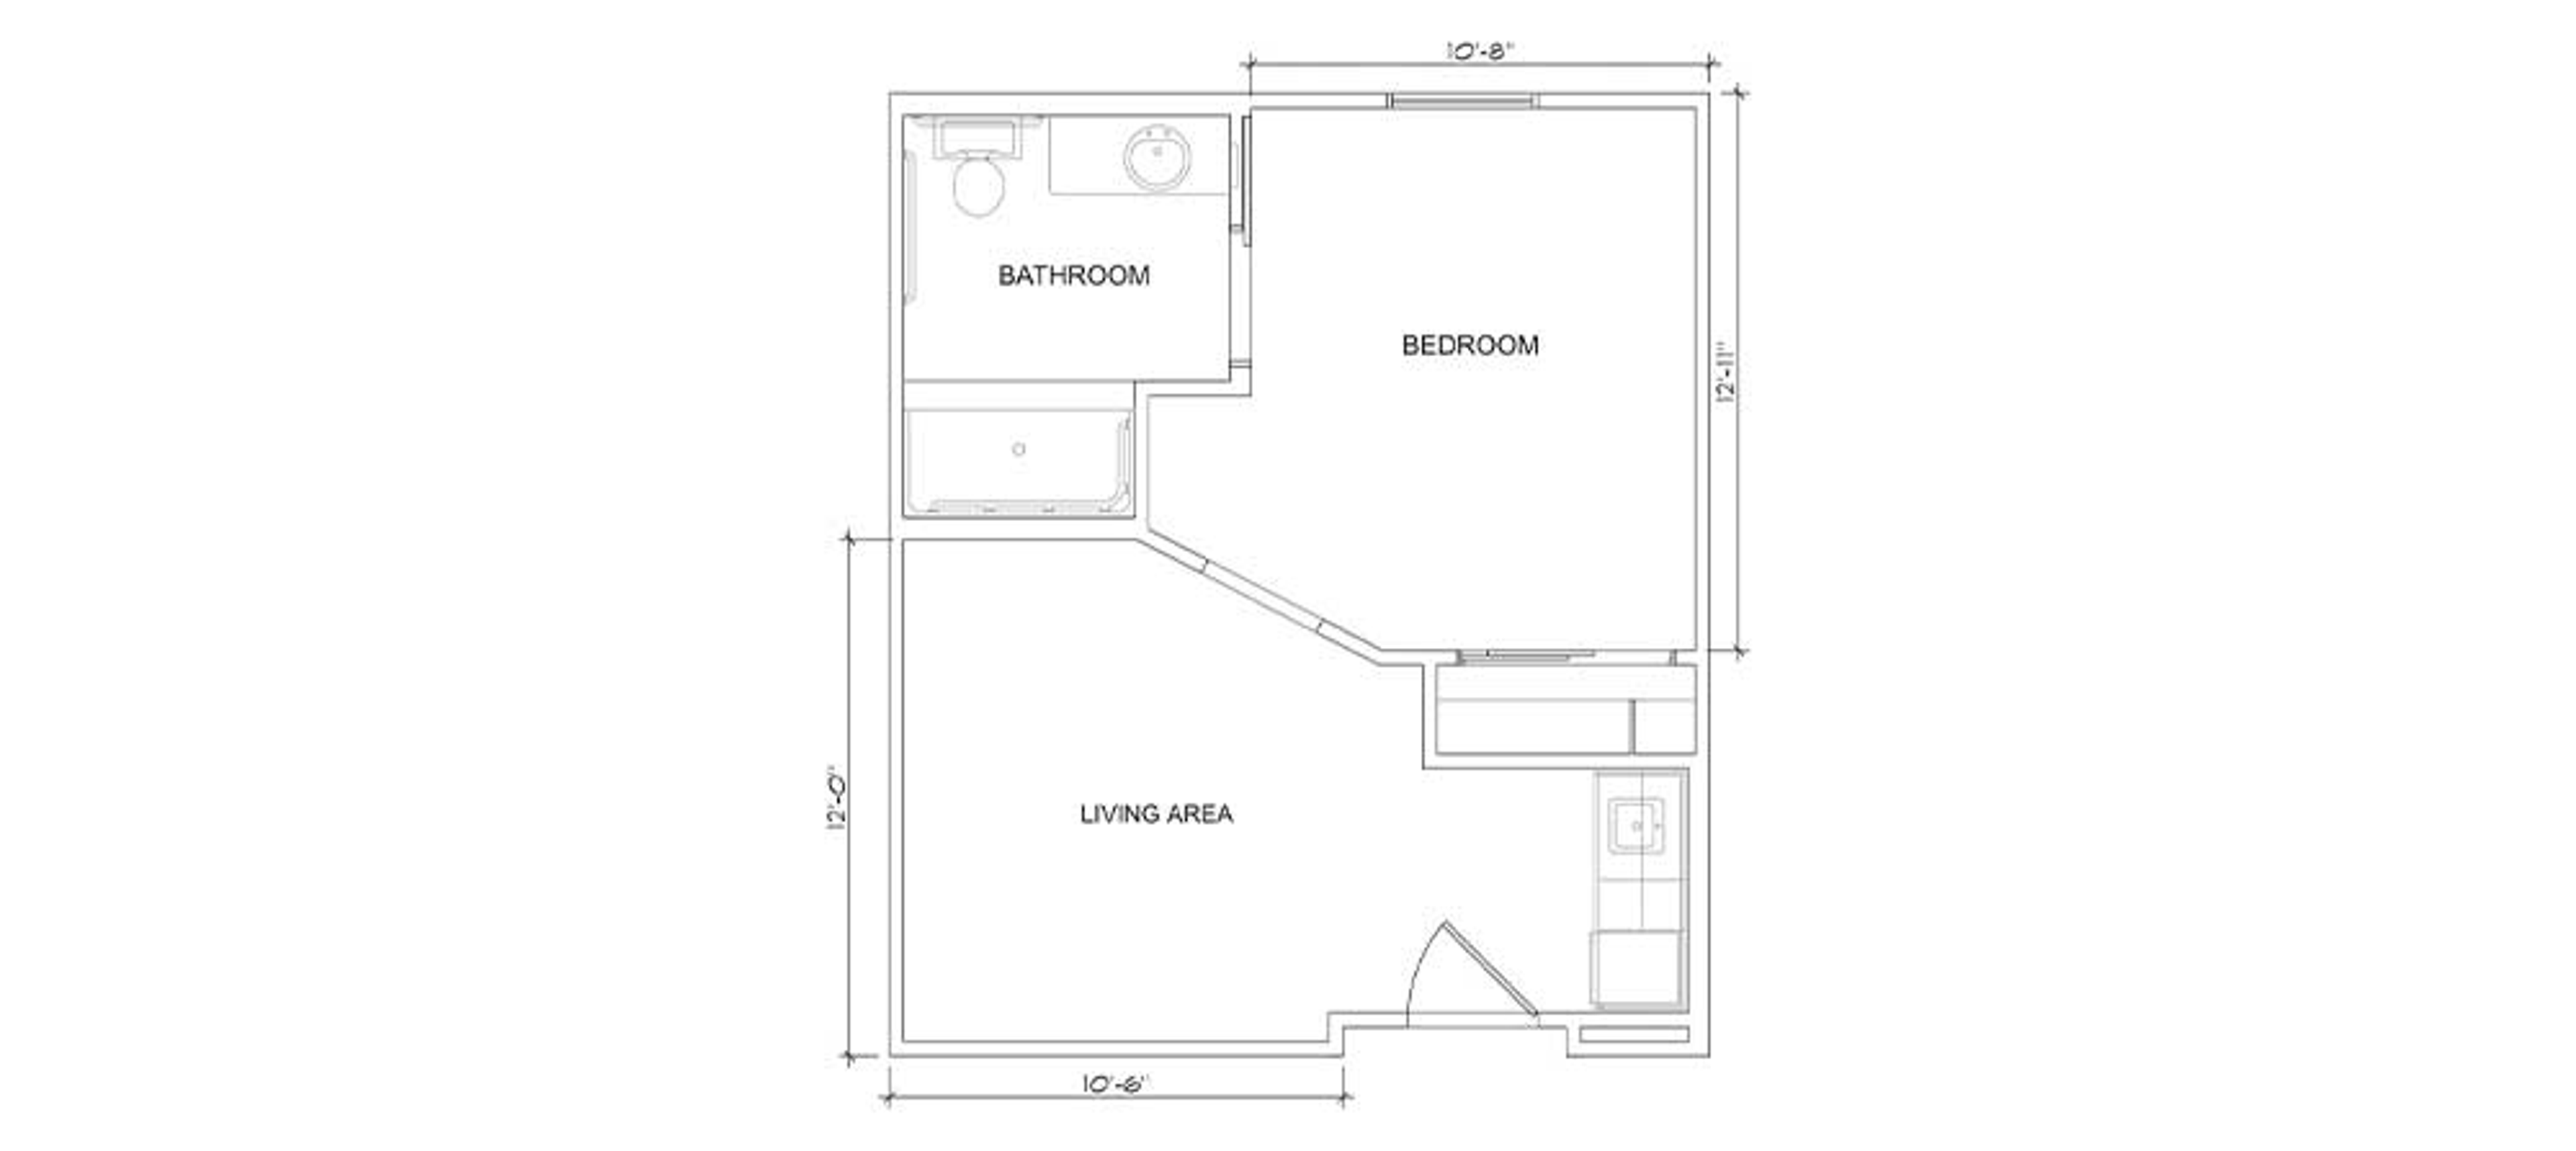 Floorplan - Walnut Creek - 1 bed, 1 bath, Deluxe Assisted Living